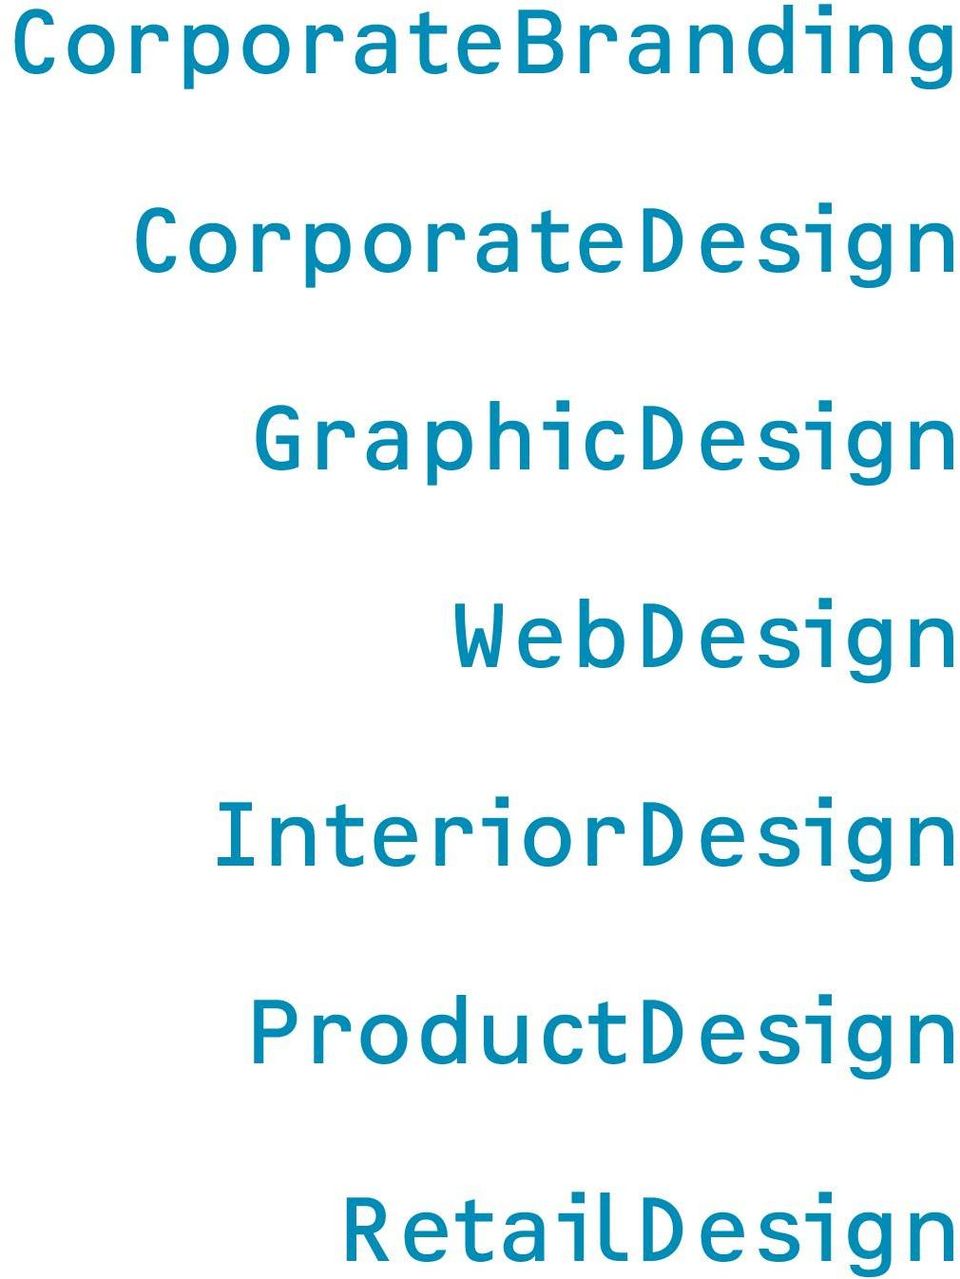 GraphicDesign WebDesign